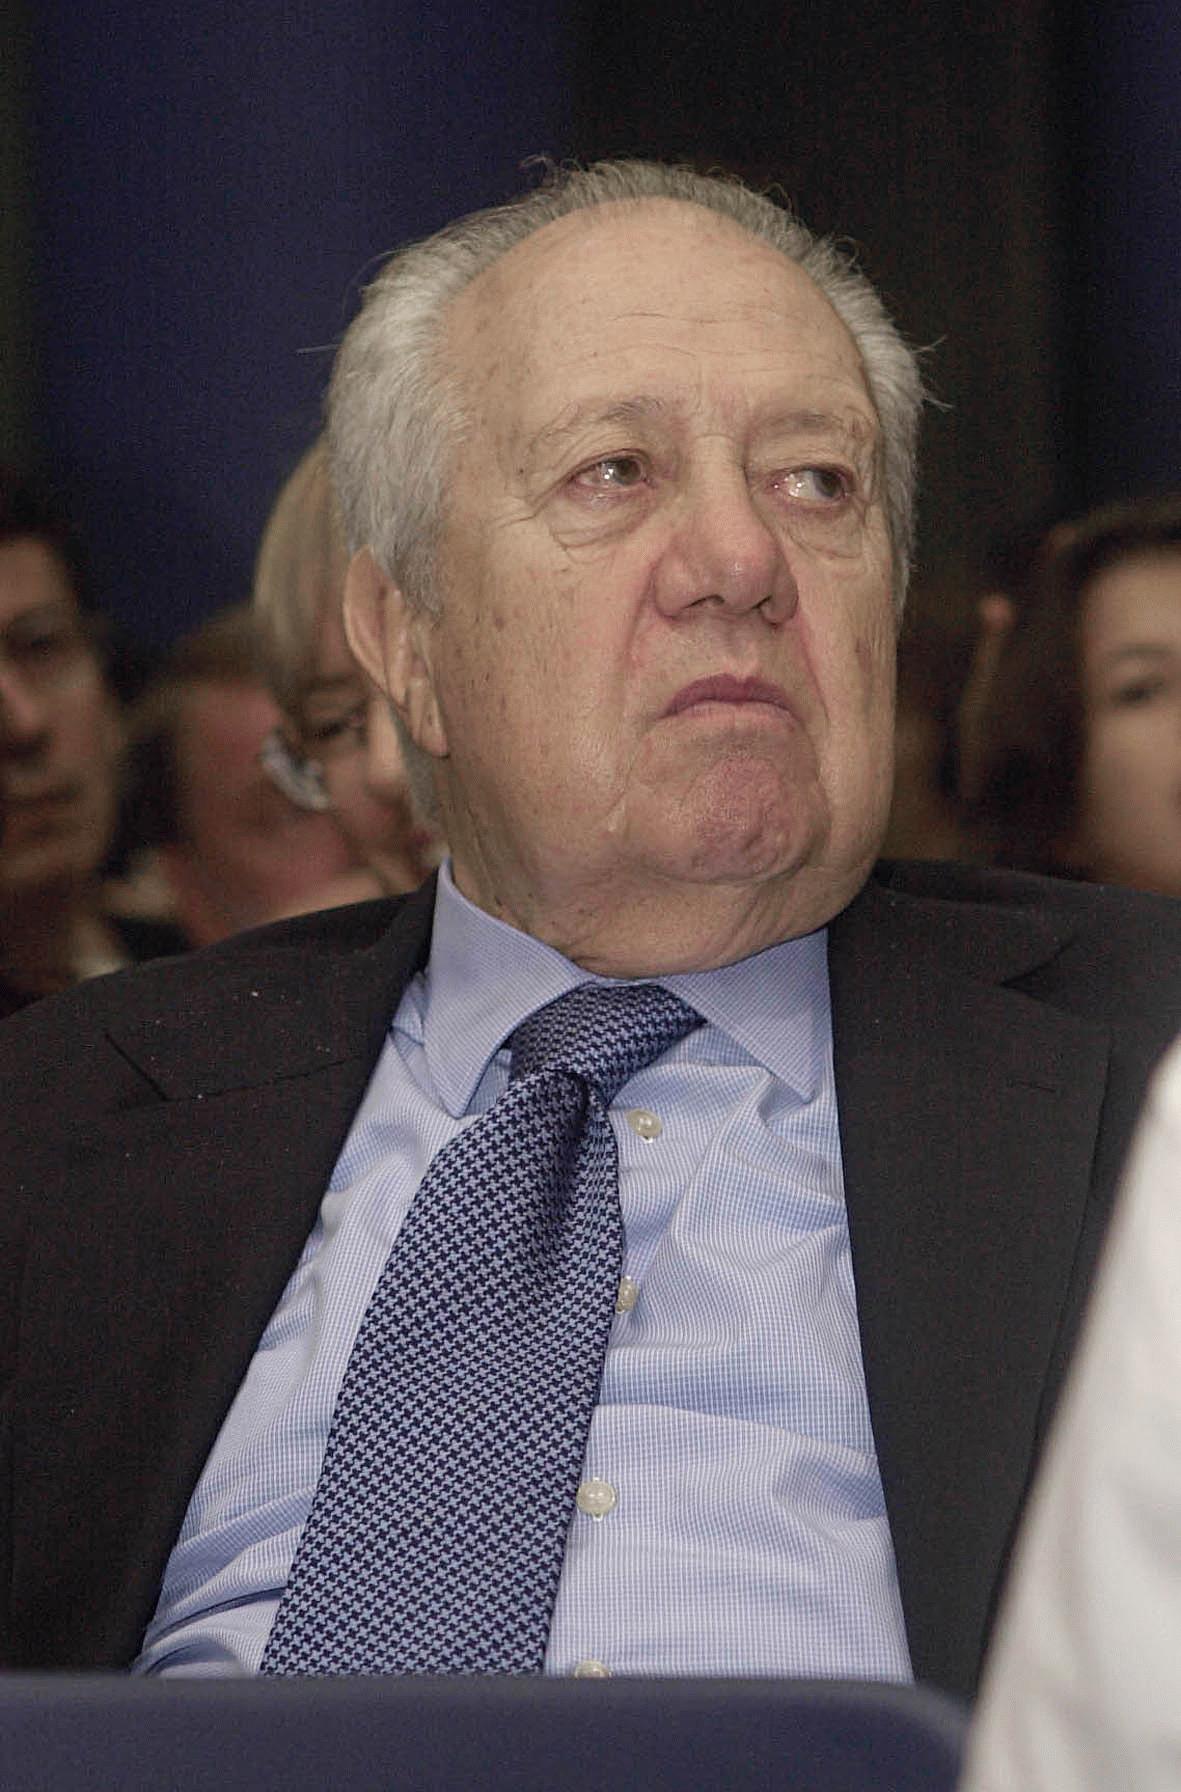 Mário Soares, former prime minister of Portugal, dies aged 92